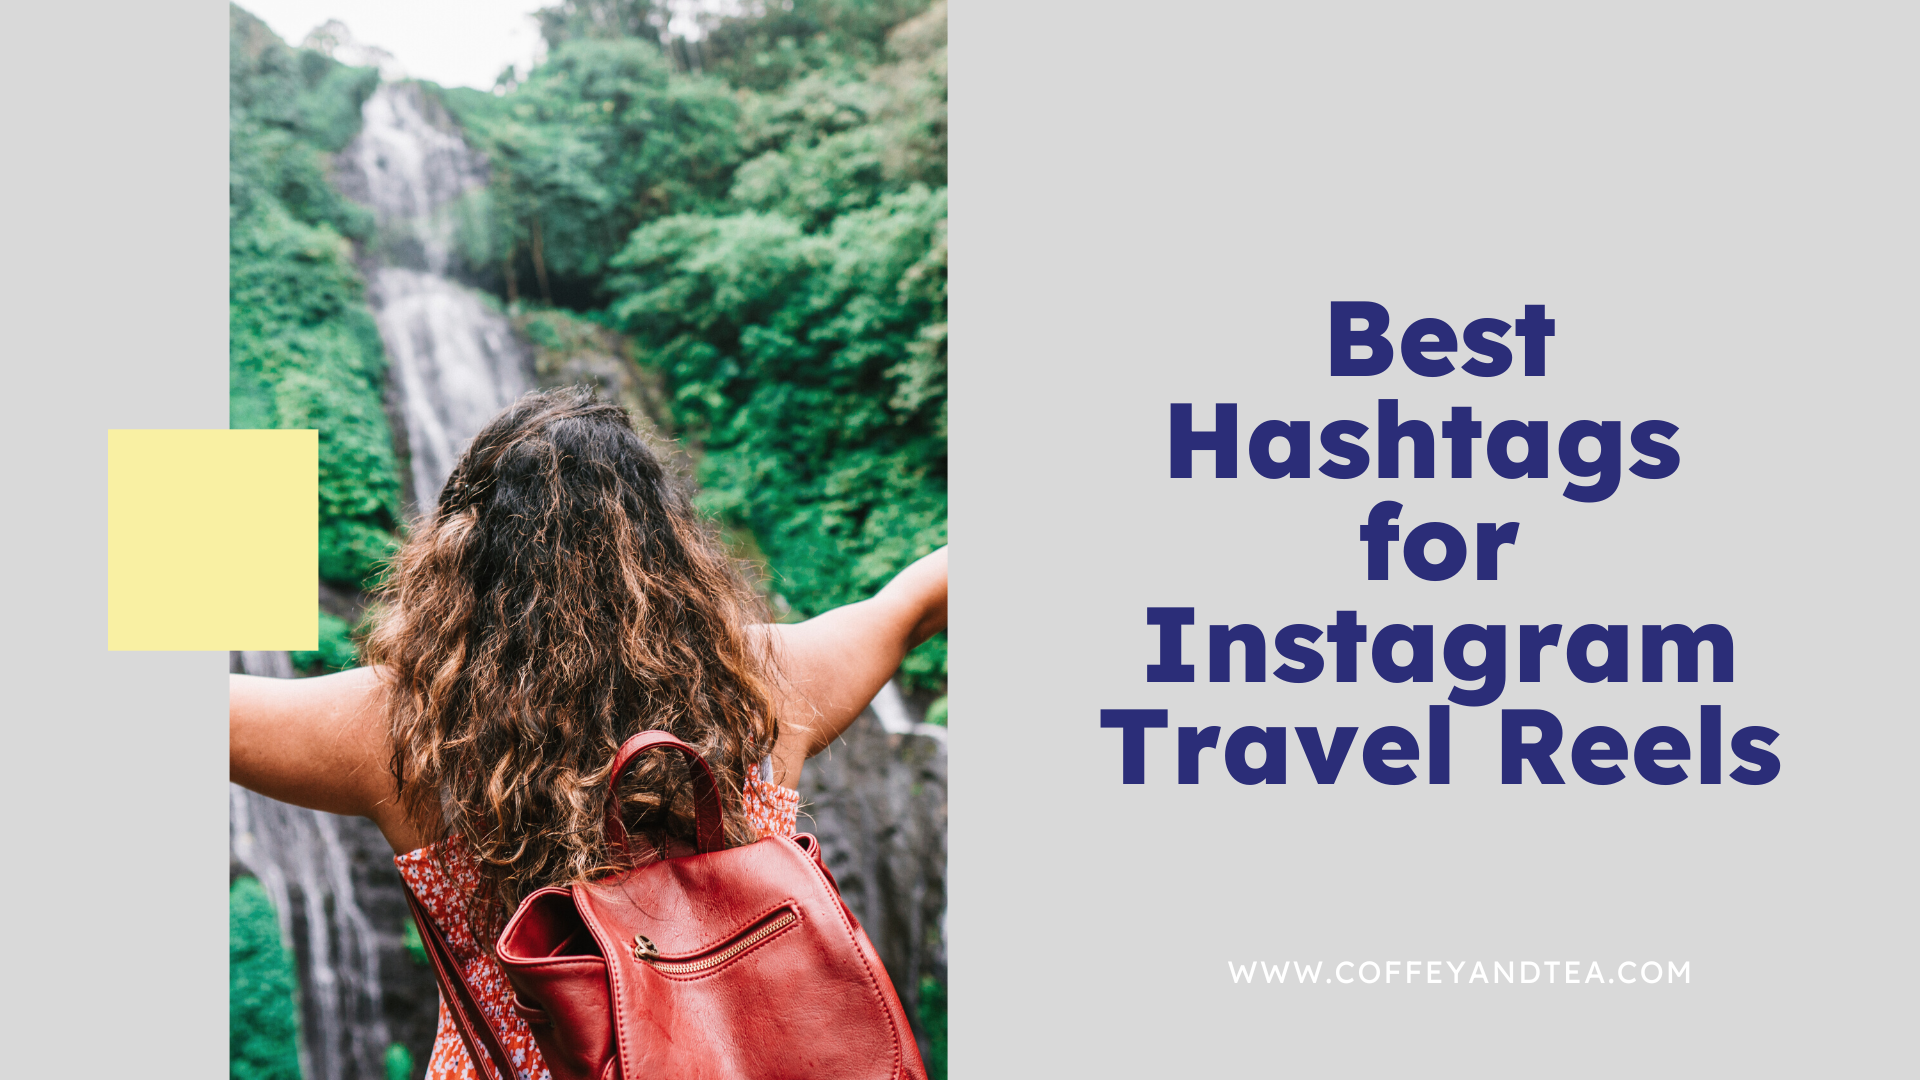 travel reels instagram hashtags